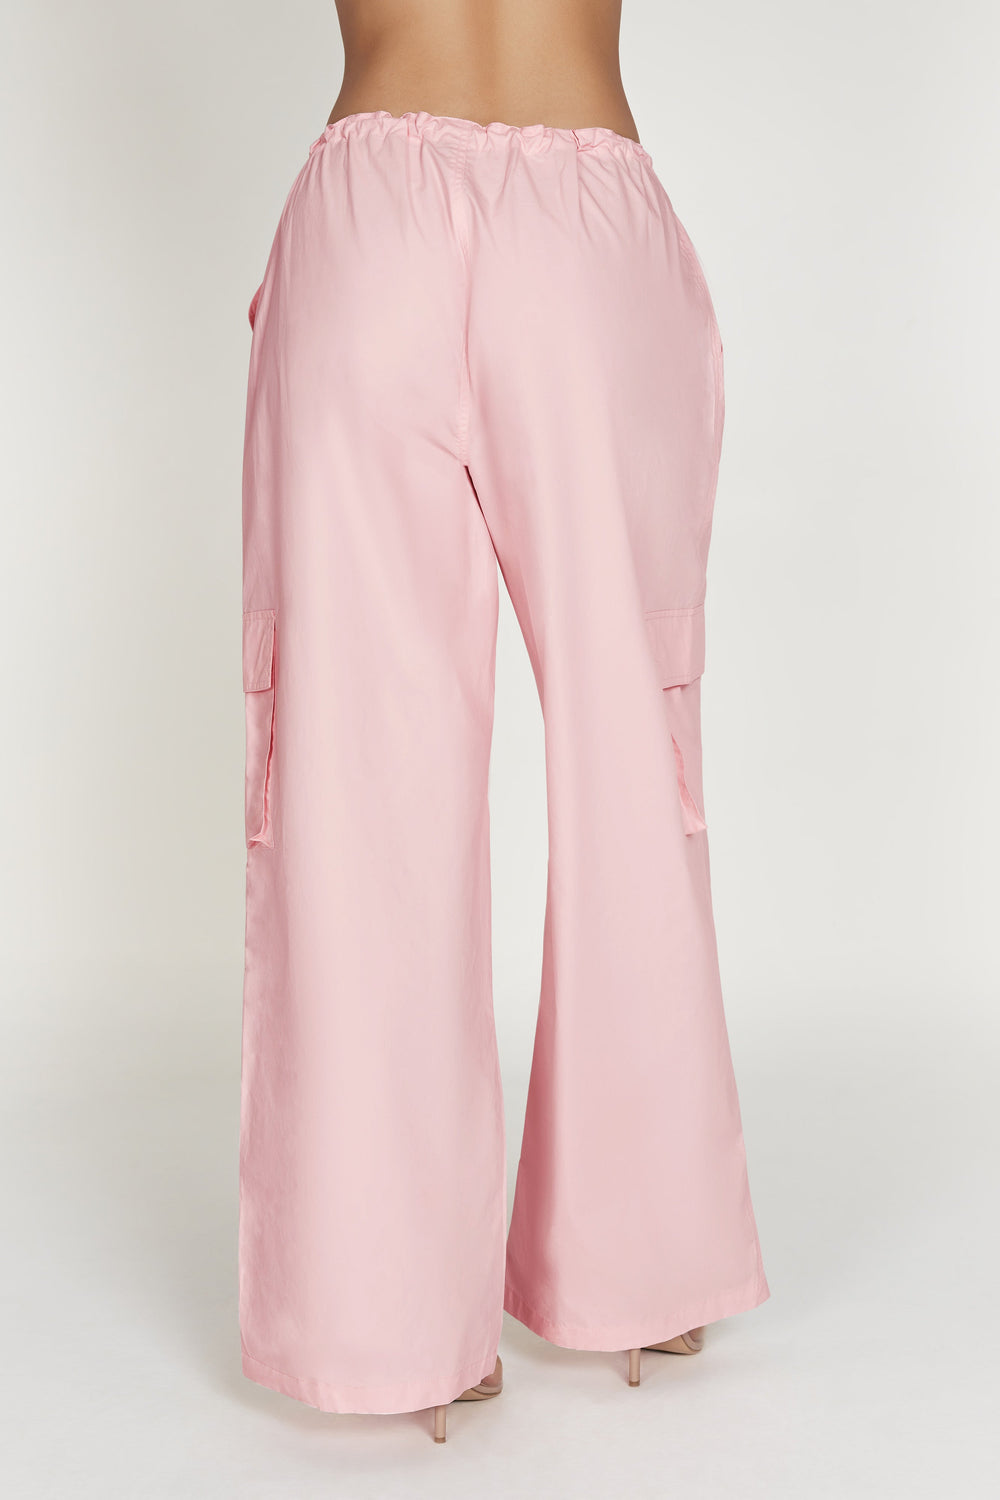 Amara Parachute Pants - Baby Pink